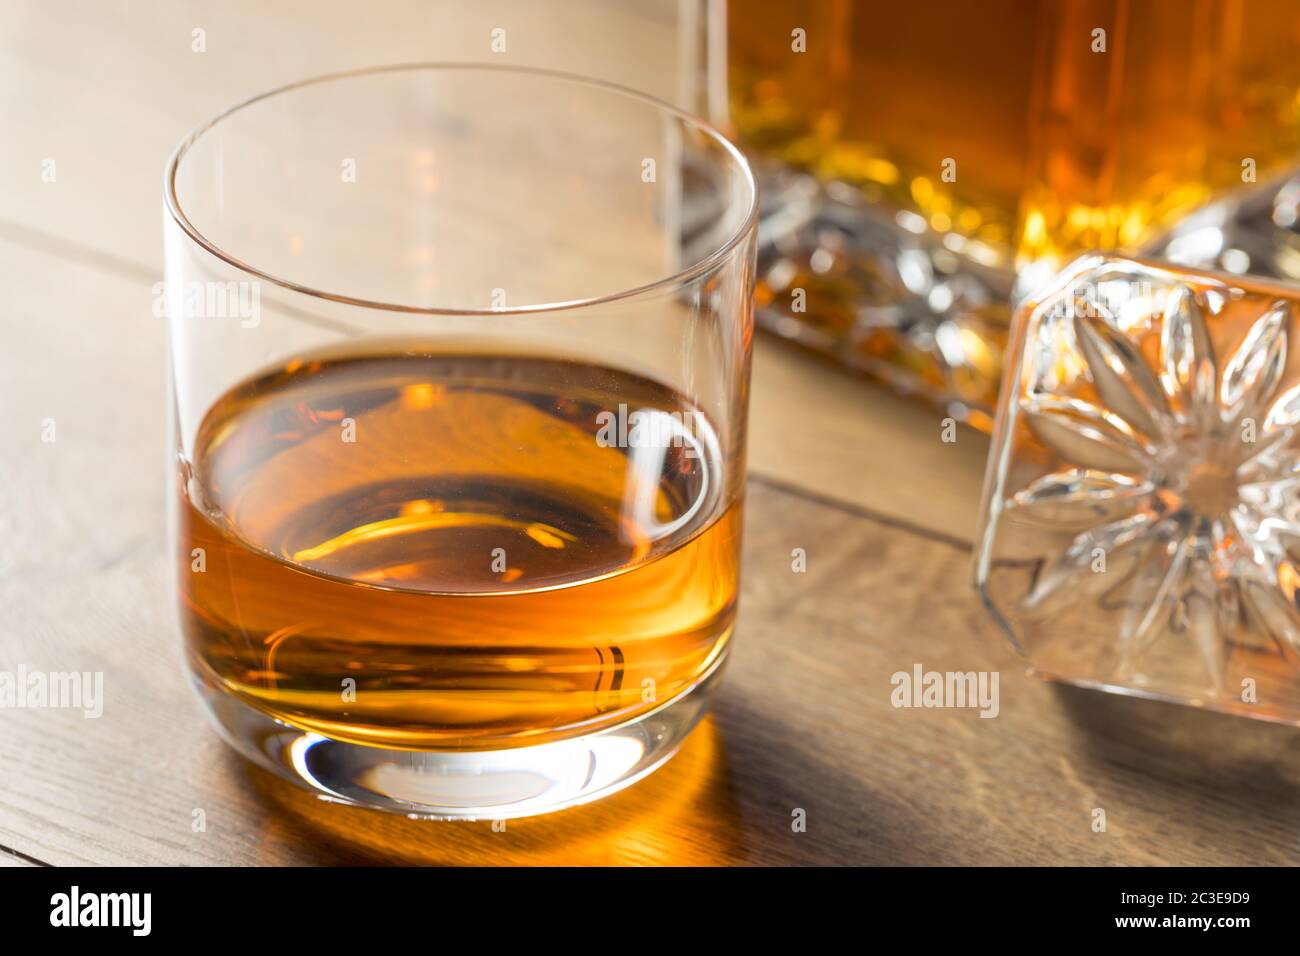 Boozy Alcoholic Whiskey Neat in a Rocks Glass Stock Photo